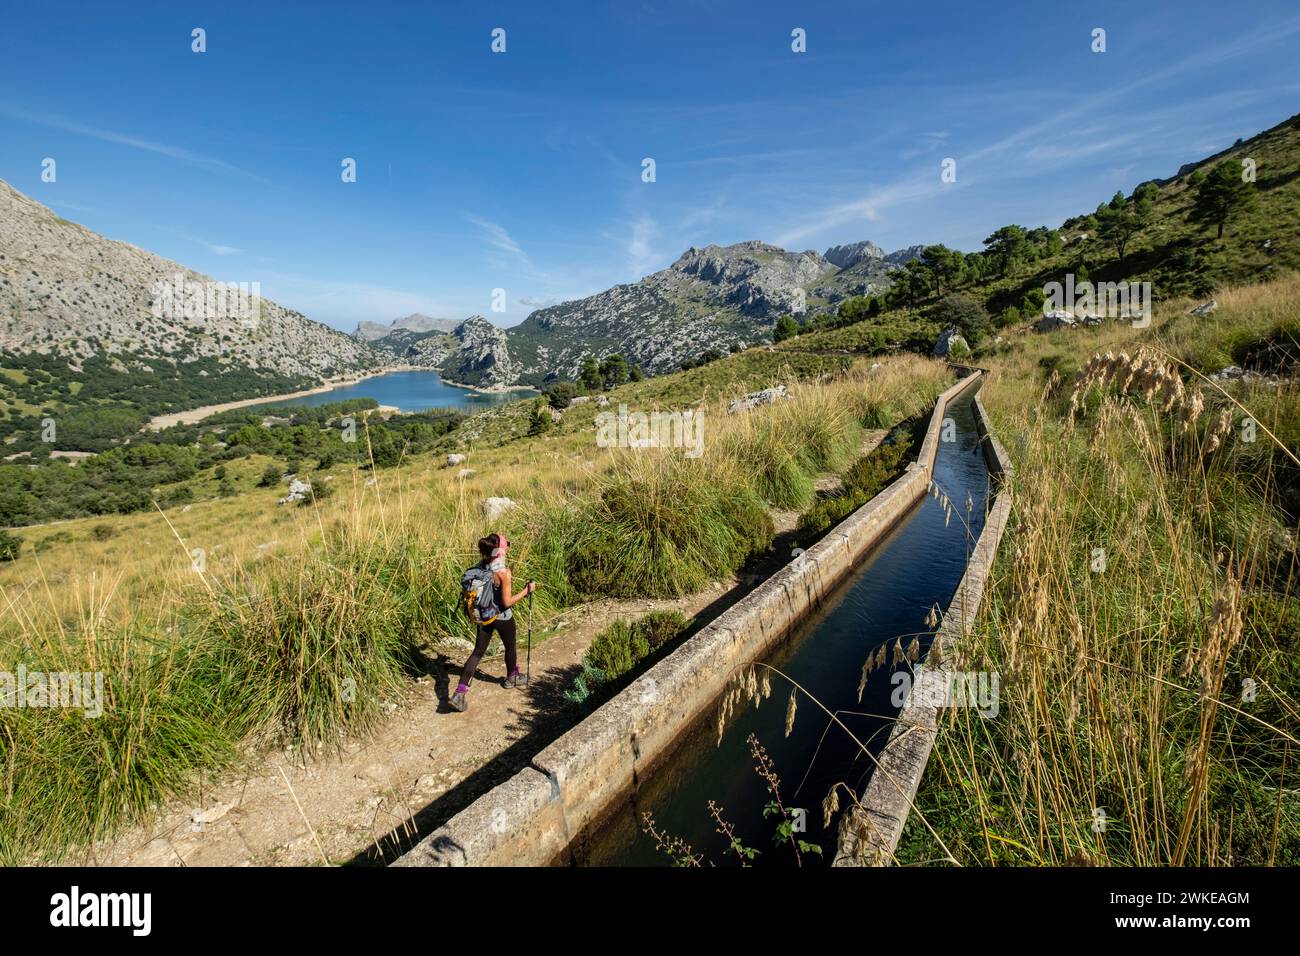 escursionista andando junto a la canal de transvase del Gorg Blau - Cúber, Escorca, Paraje natural de la Serra de Tramuntana, Mallorca, balearic islands, Spain. Stock Photo